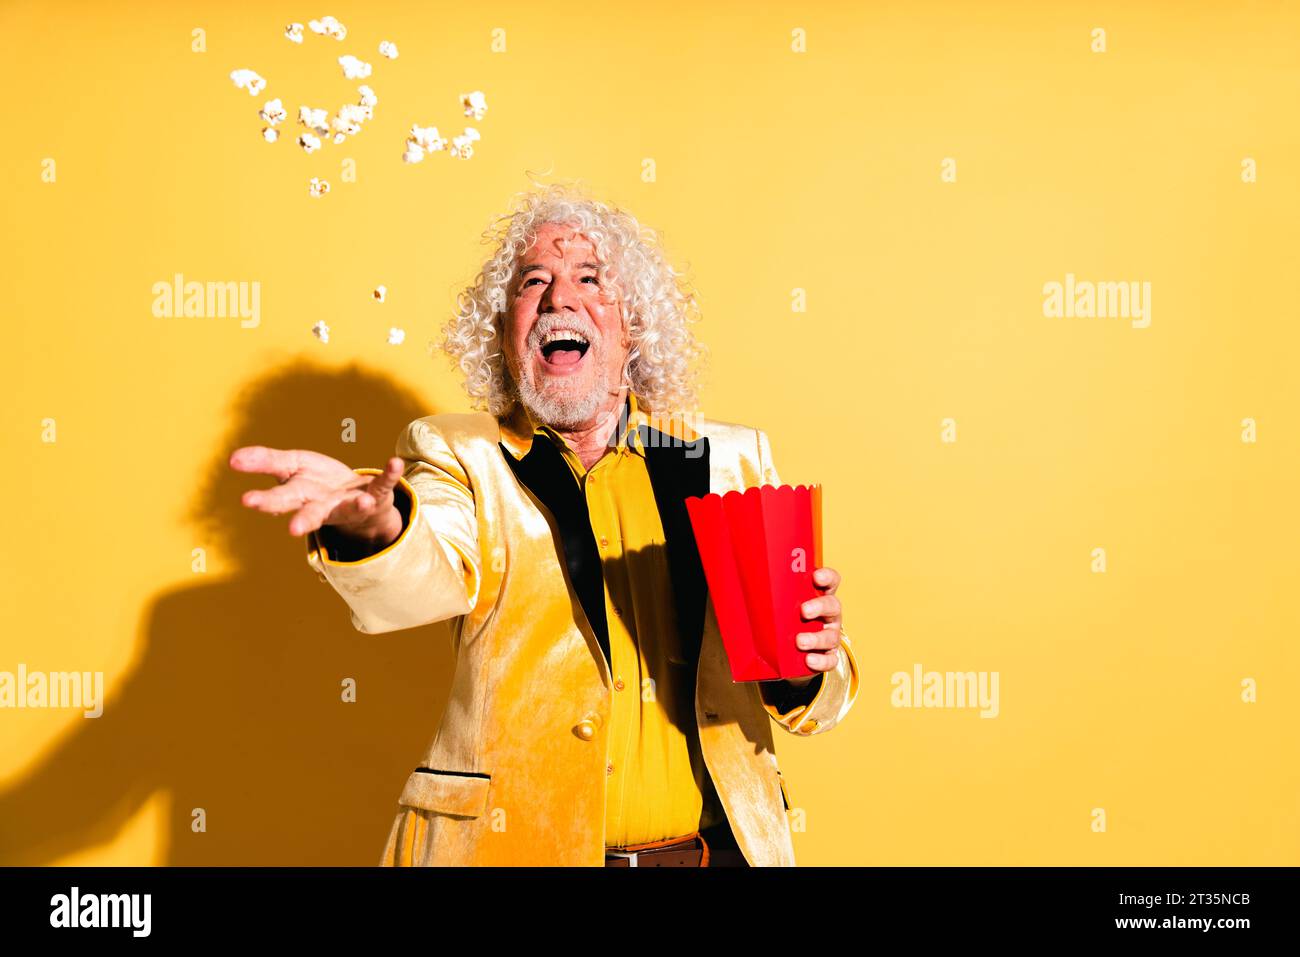 Cheerful senior man catching popcorn against yellow background Stock Photo